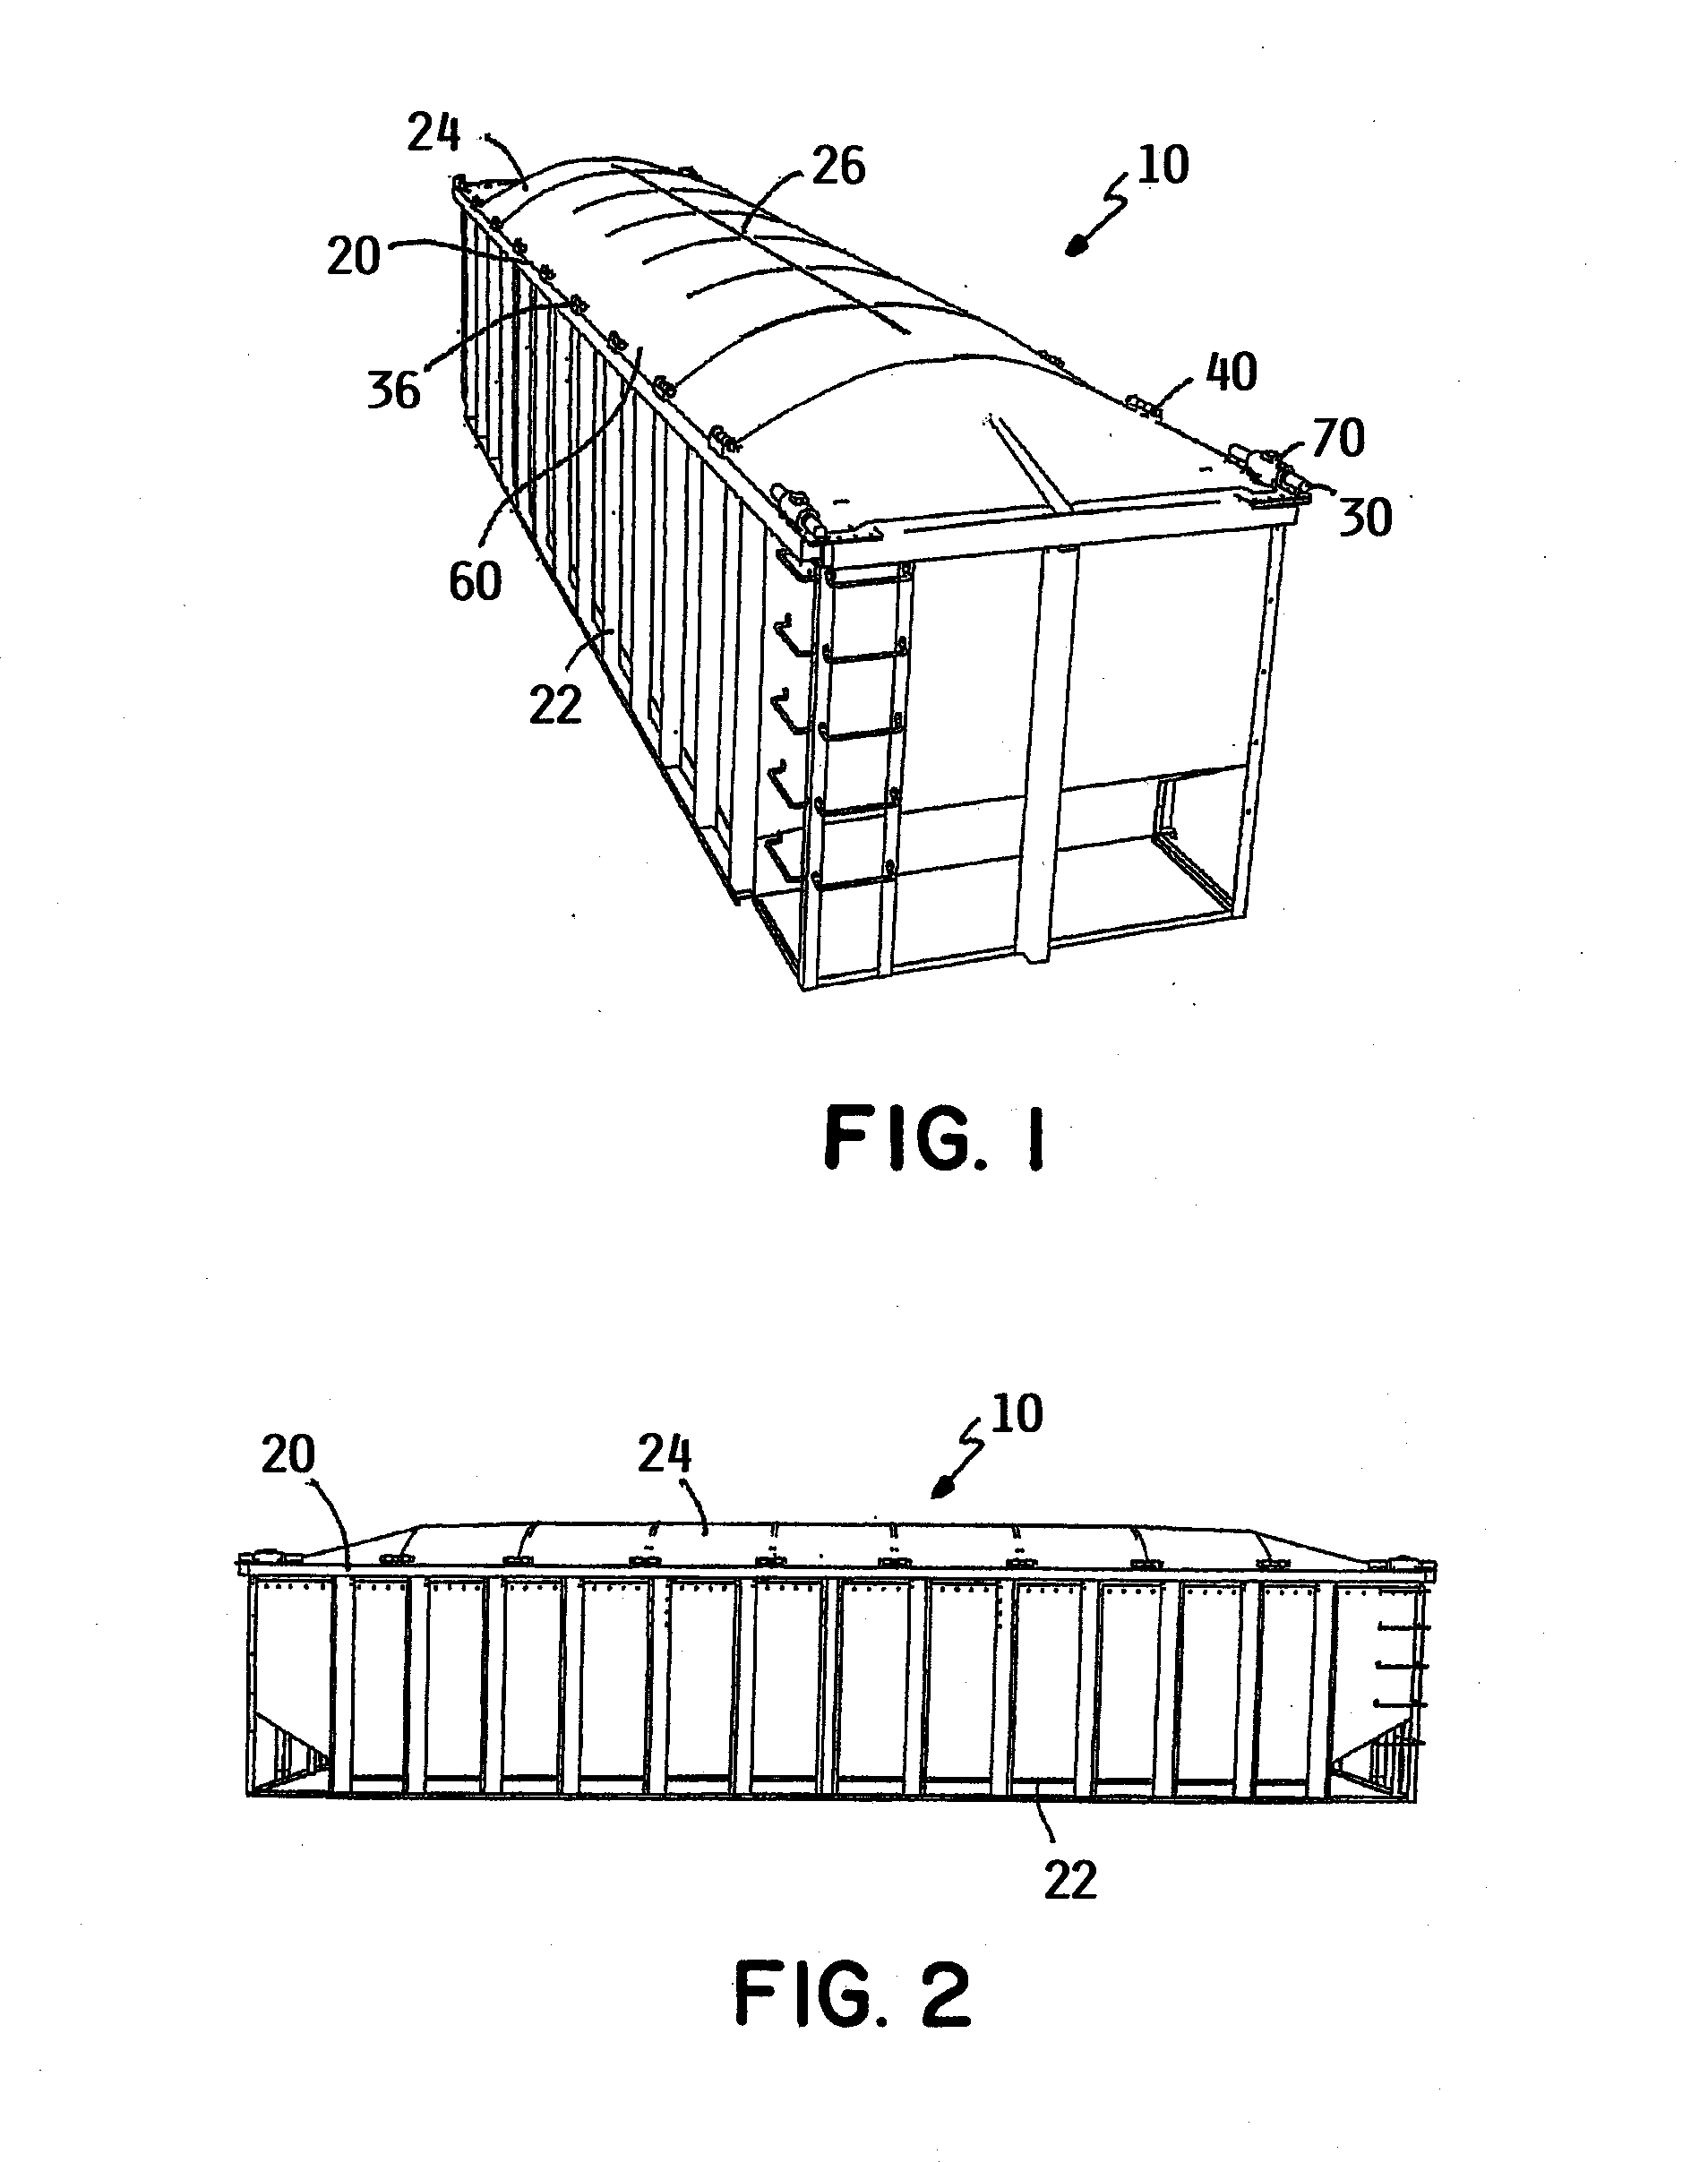 Rail car cover system